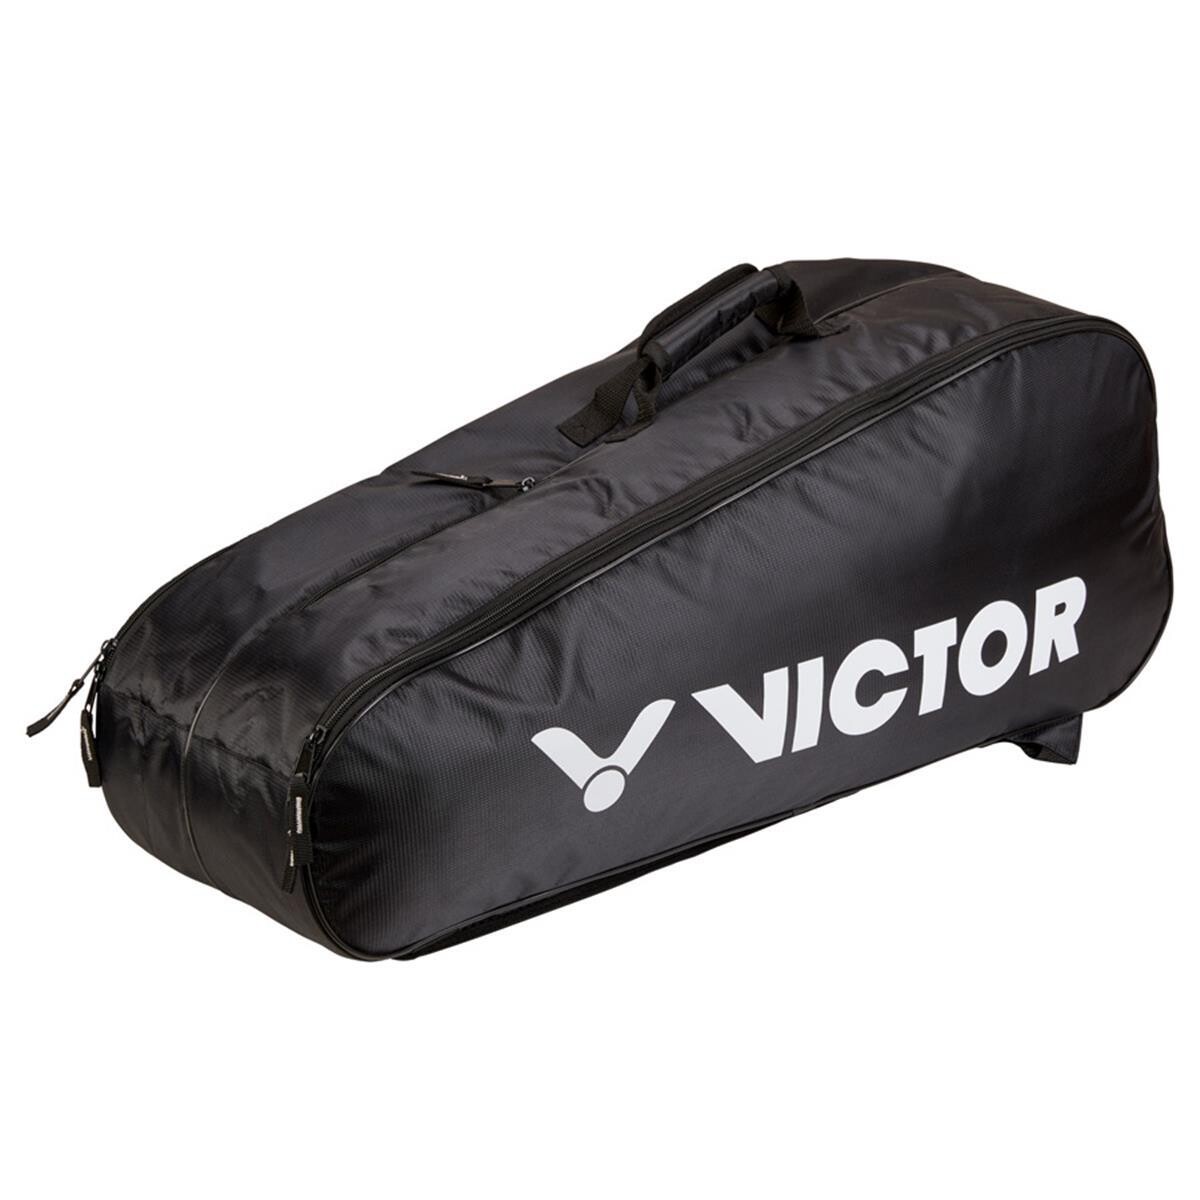 Victor Doublethermo Bag 9150 C - Black